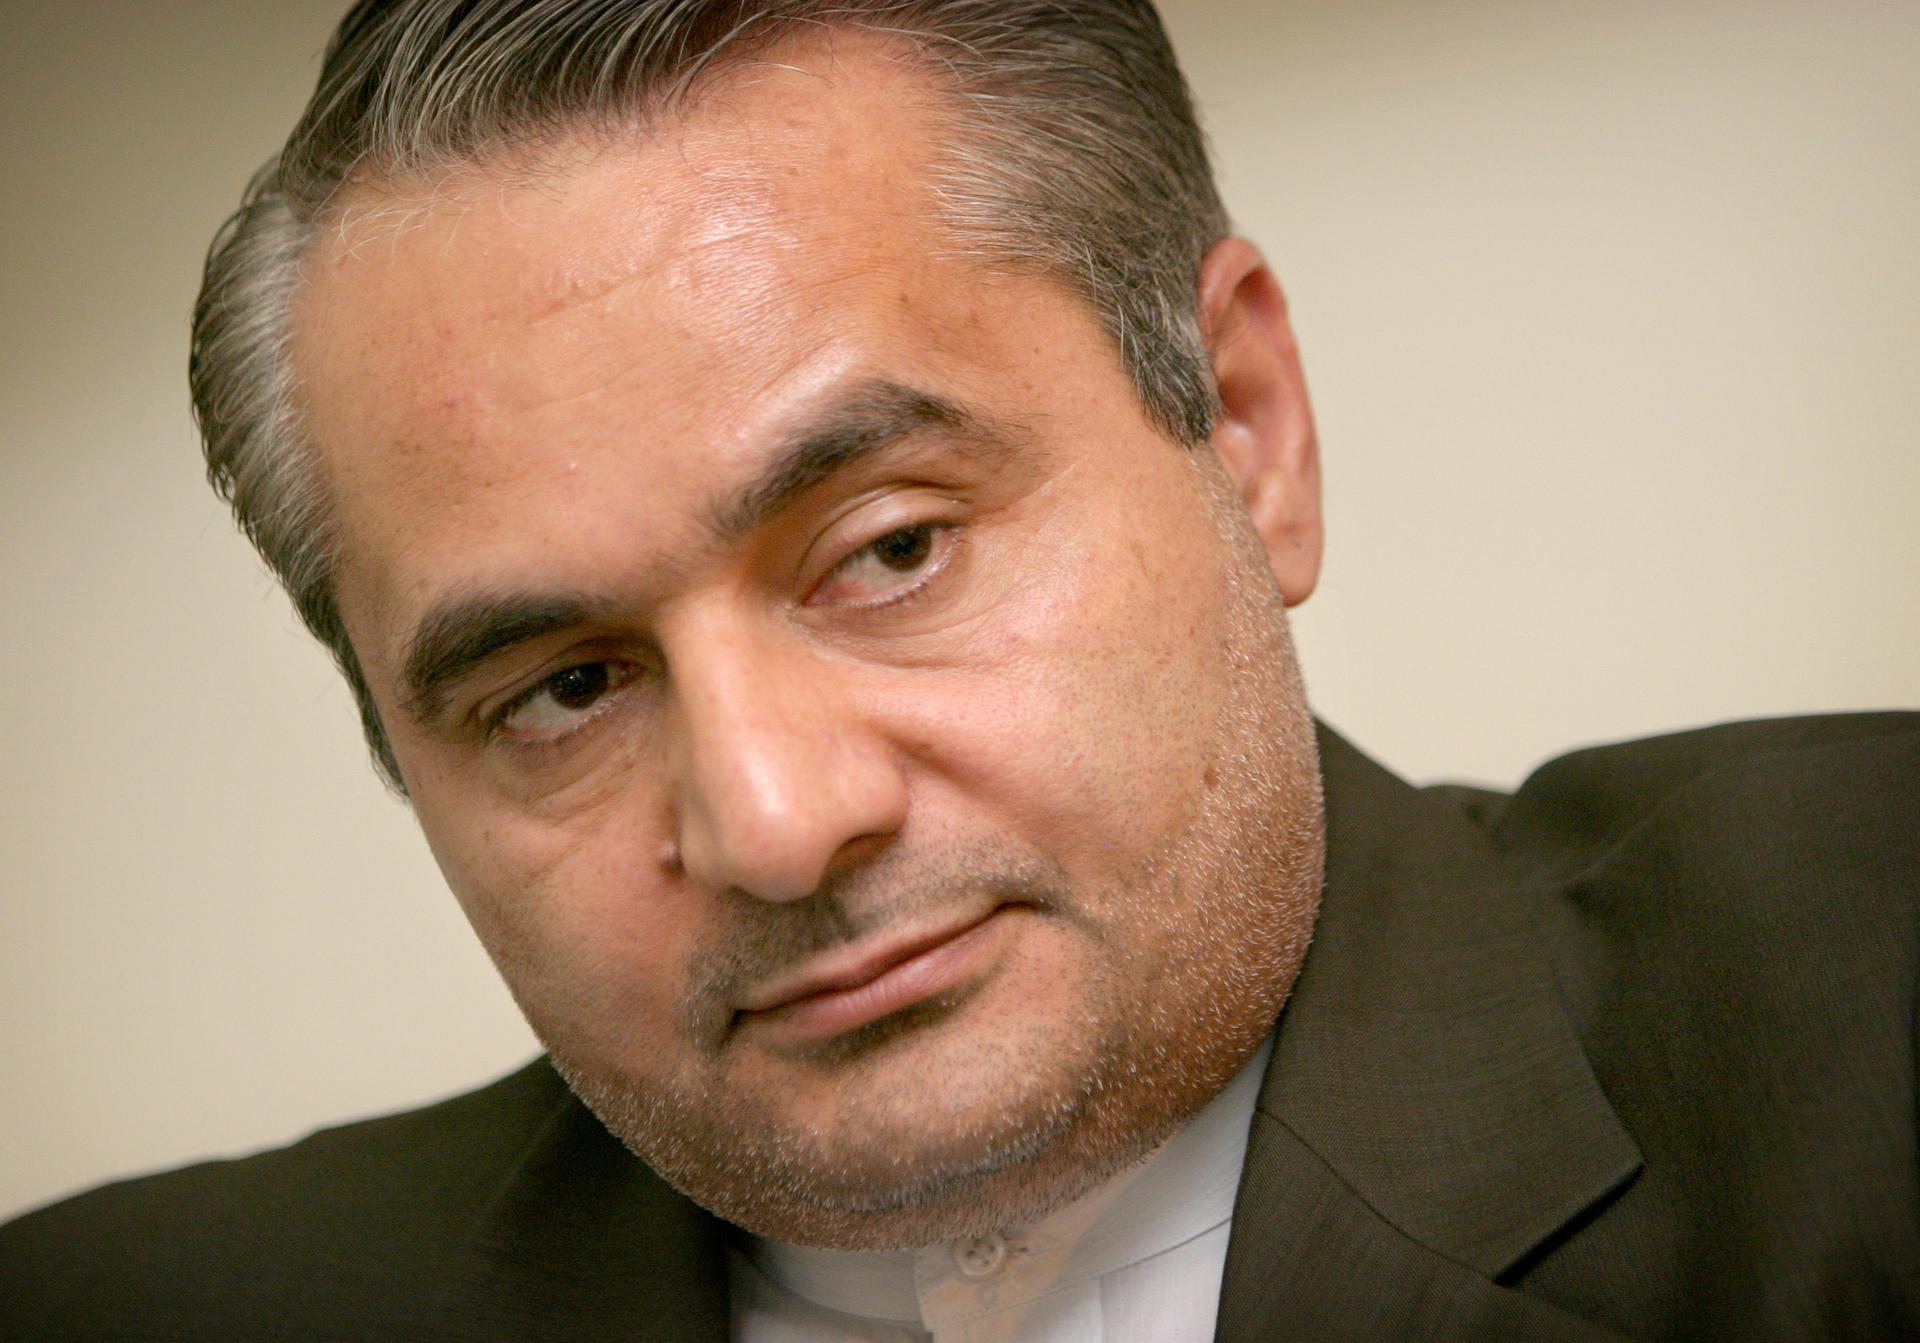 Seyed Hossein Mousavian says Iran's politics share the divisive, self-defeating nature of Washington's